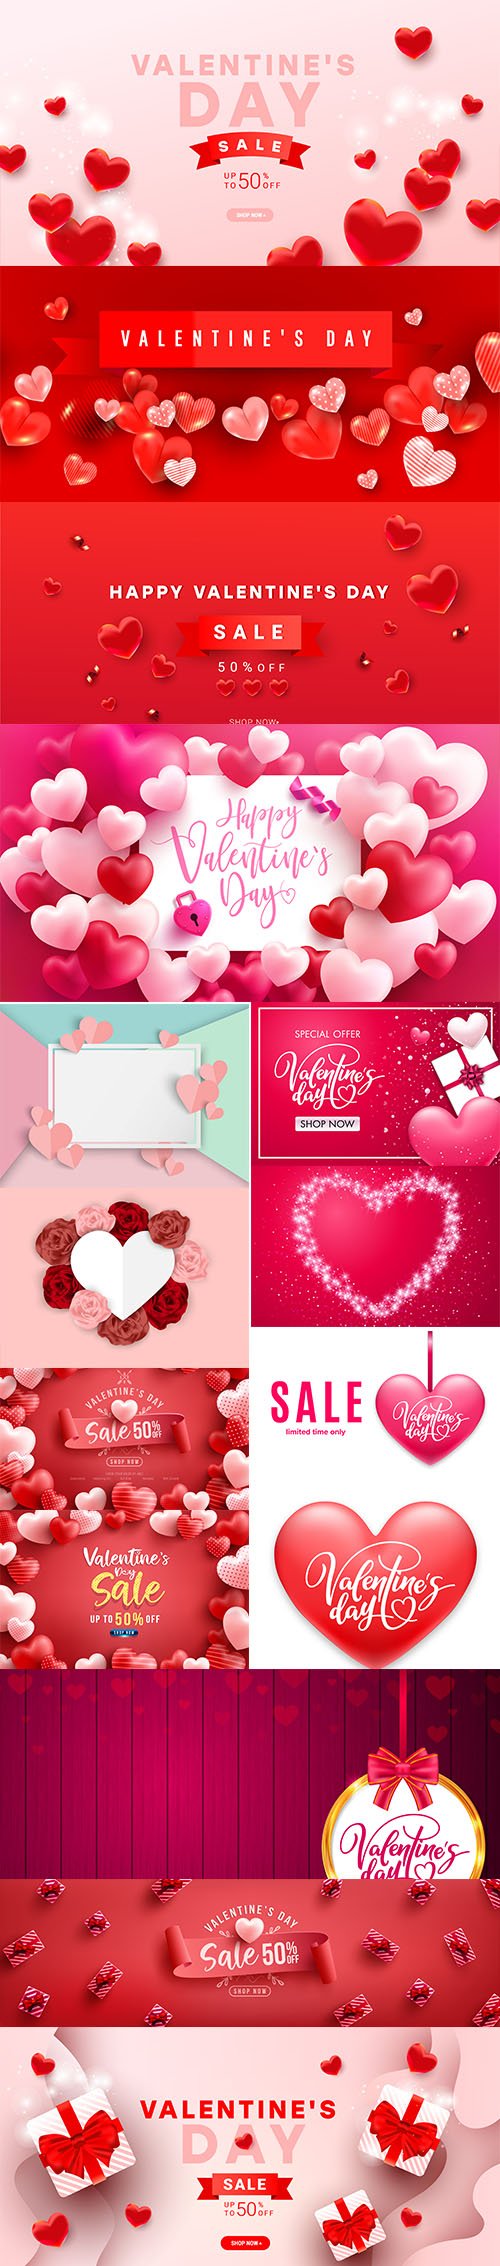 Set of Romantic Valentines Day Illustrations Vol 4